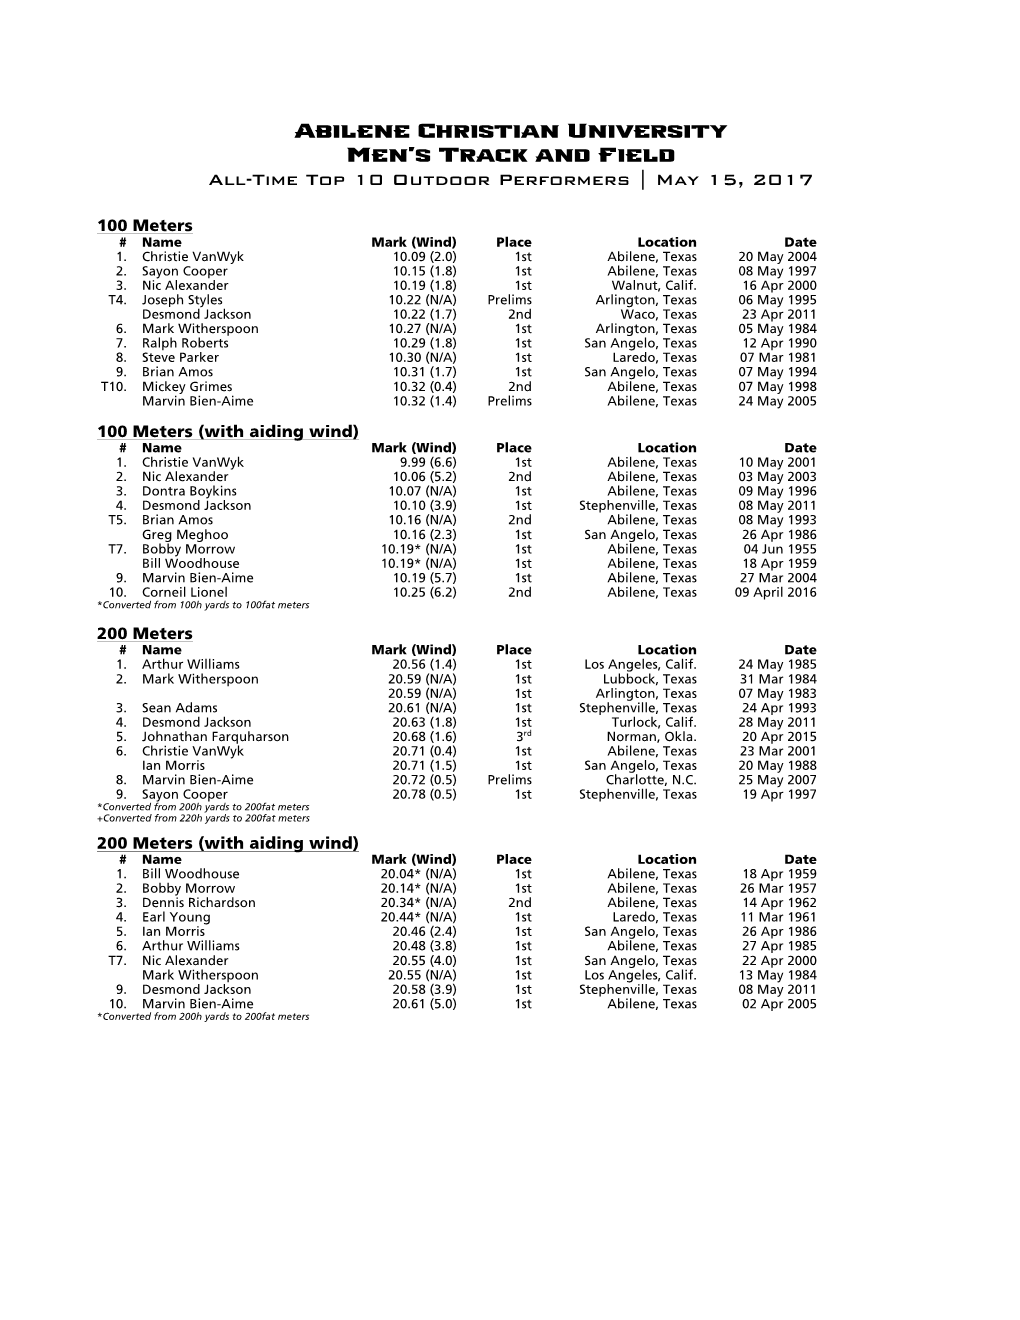 Abilene Christian University Men's Track and Field All-Time Top 10